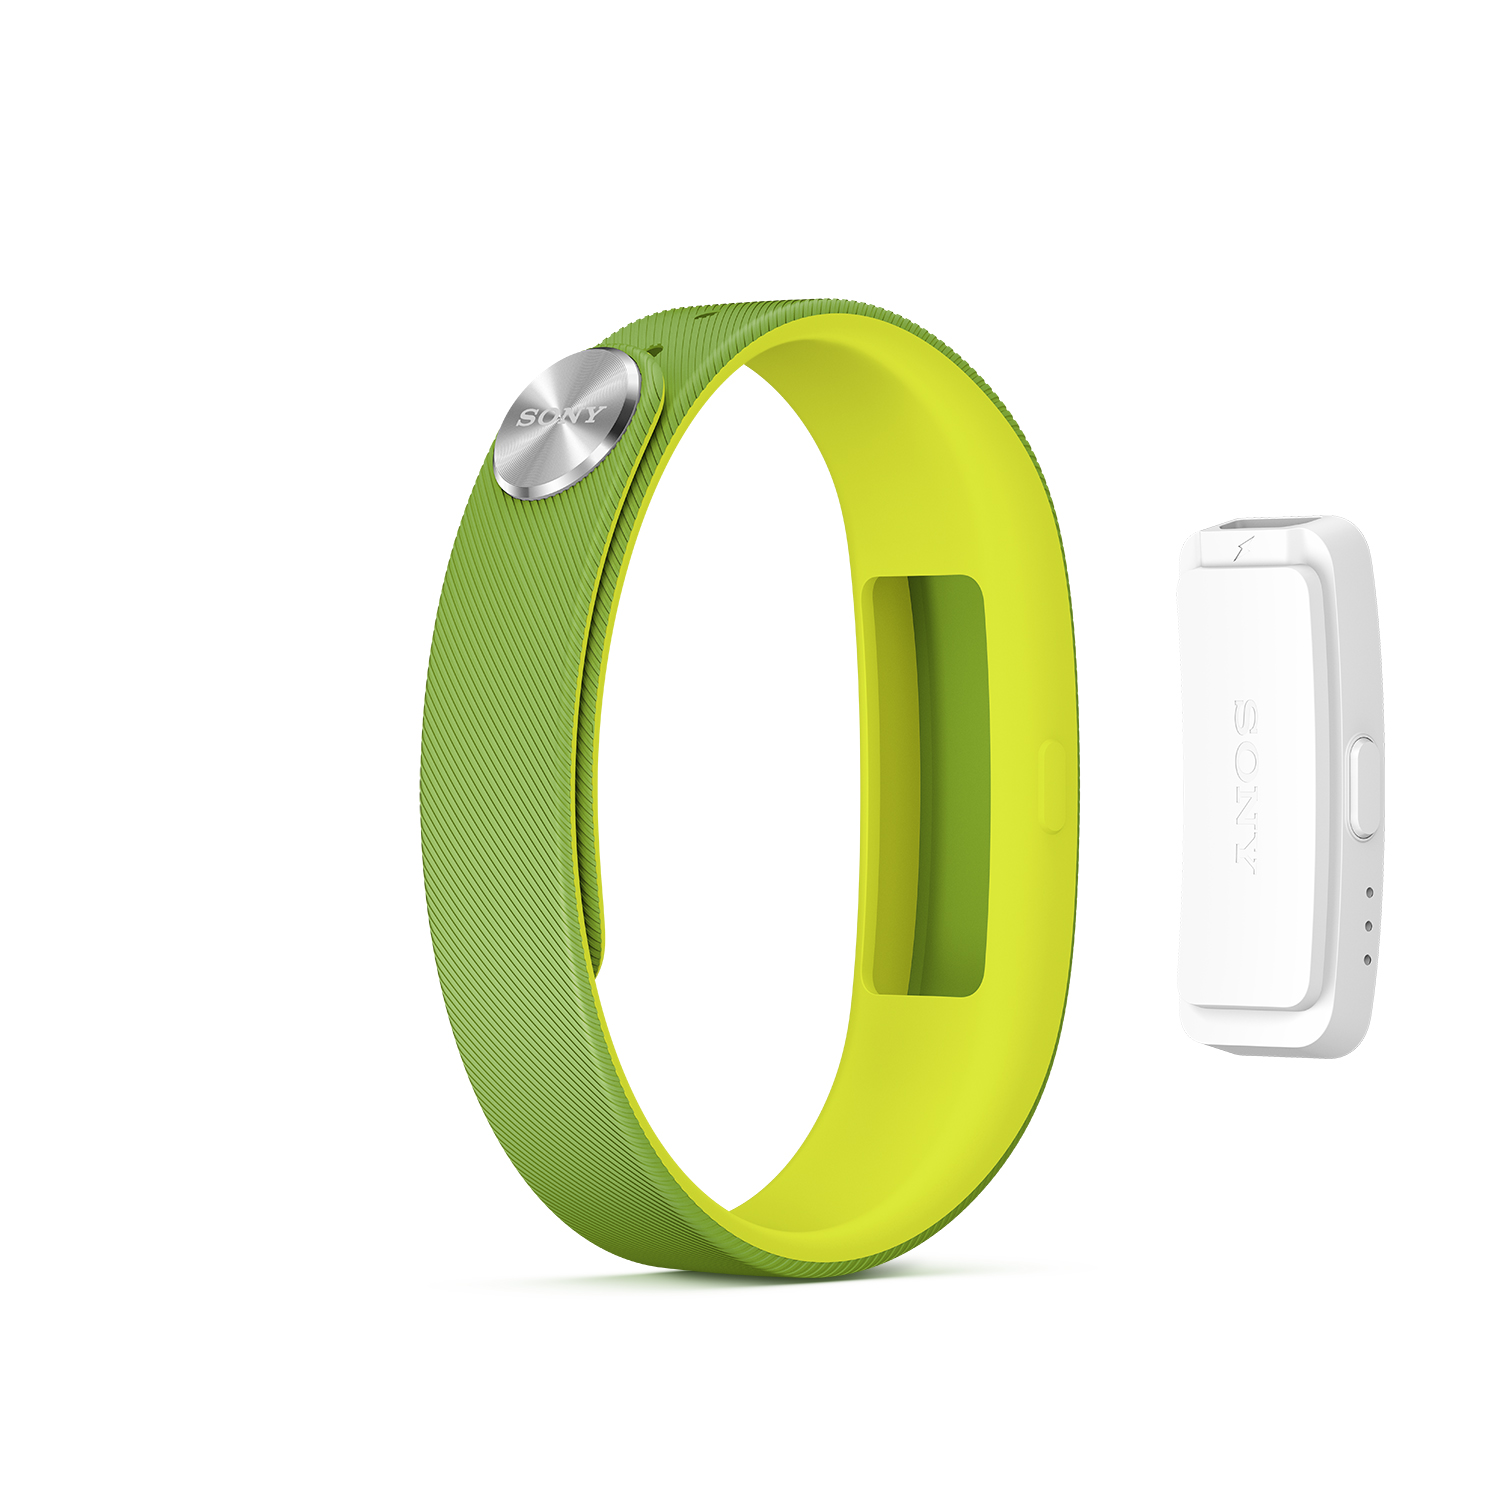 Sony SmartBand Activity Tracking Wristband SWR Limited Brazil Edition